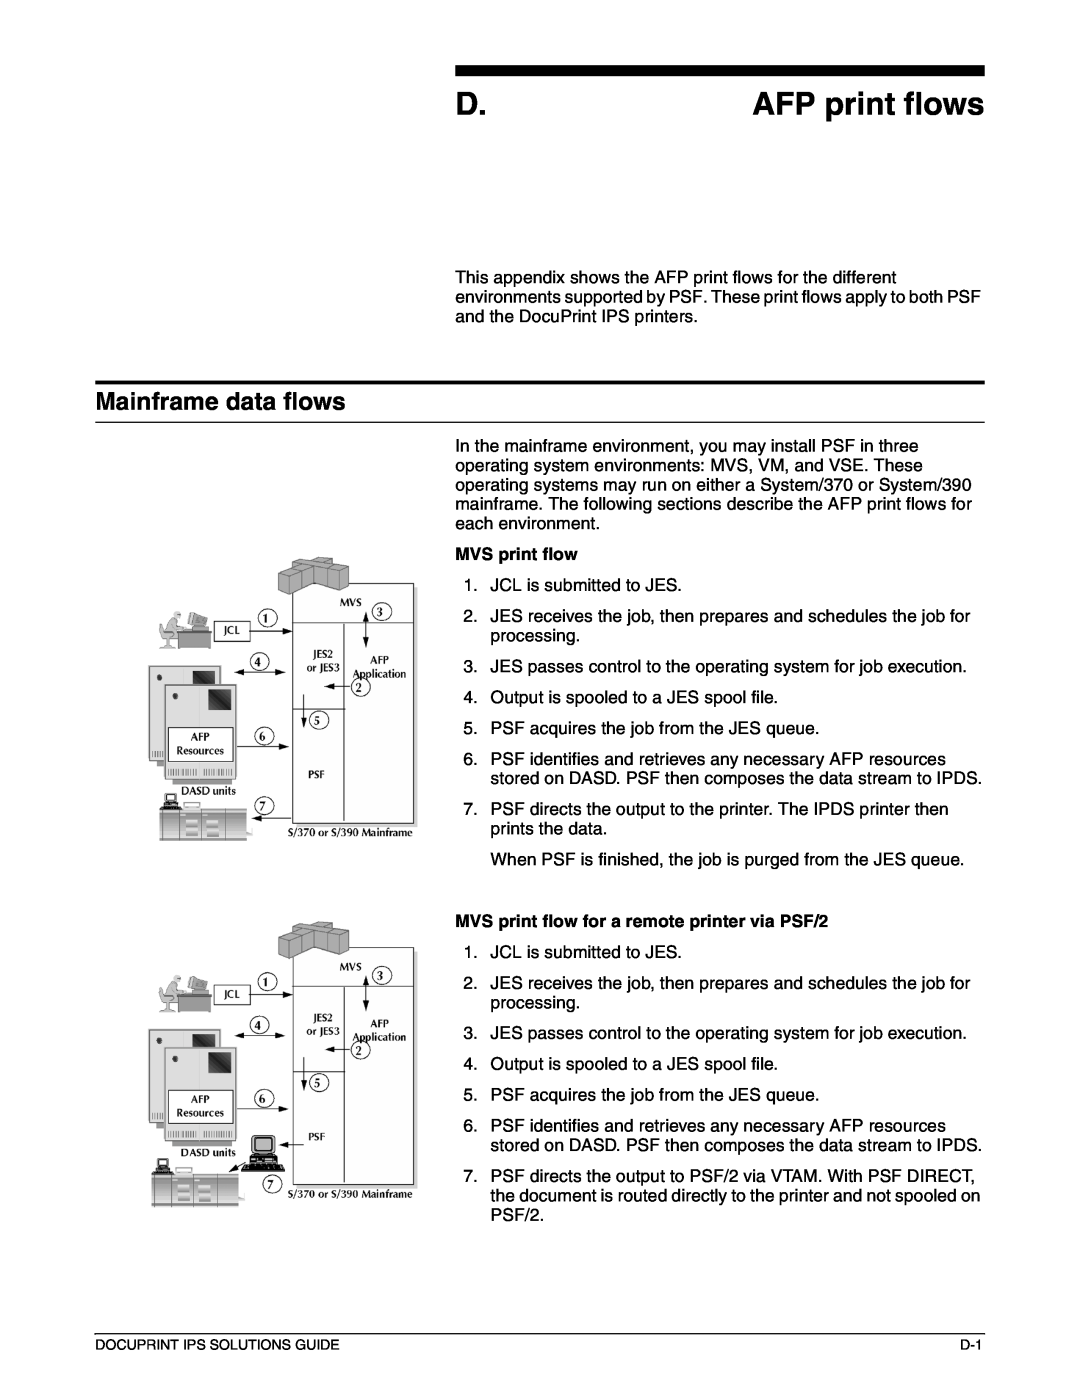 Xerox 721P88200 manual AFP print flows, MVS print flow for a remote printer via PSF/2 